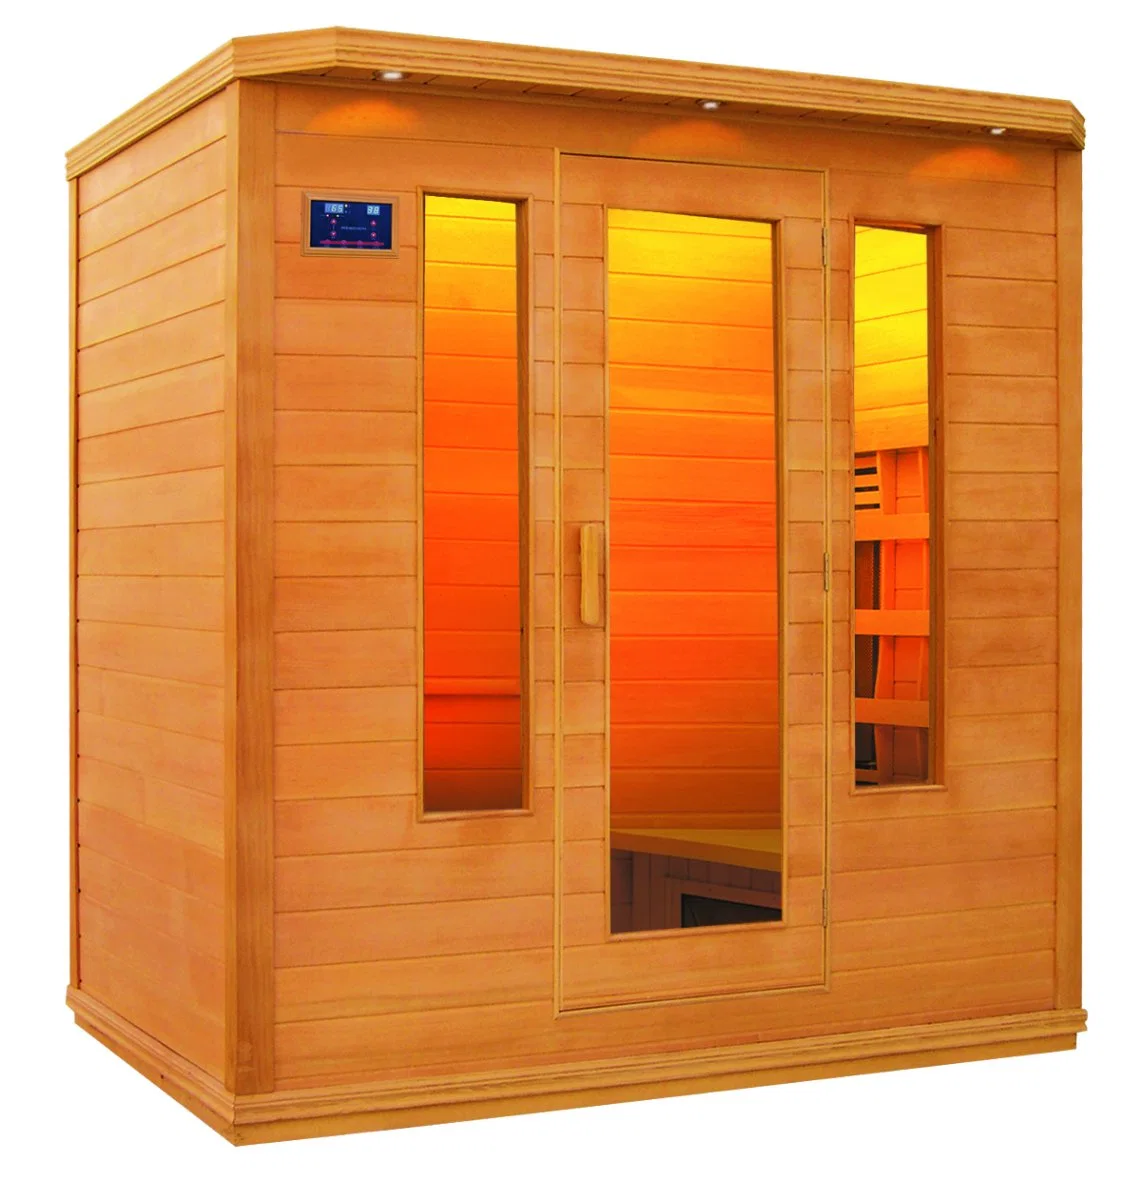 Luxury Solid Wood Room Dry Steam Sauna Room Infrared Sauna